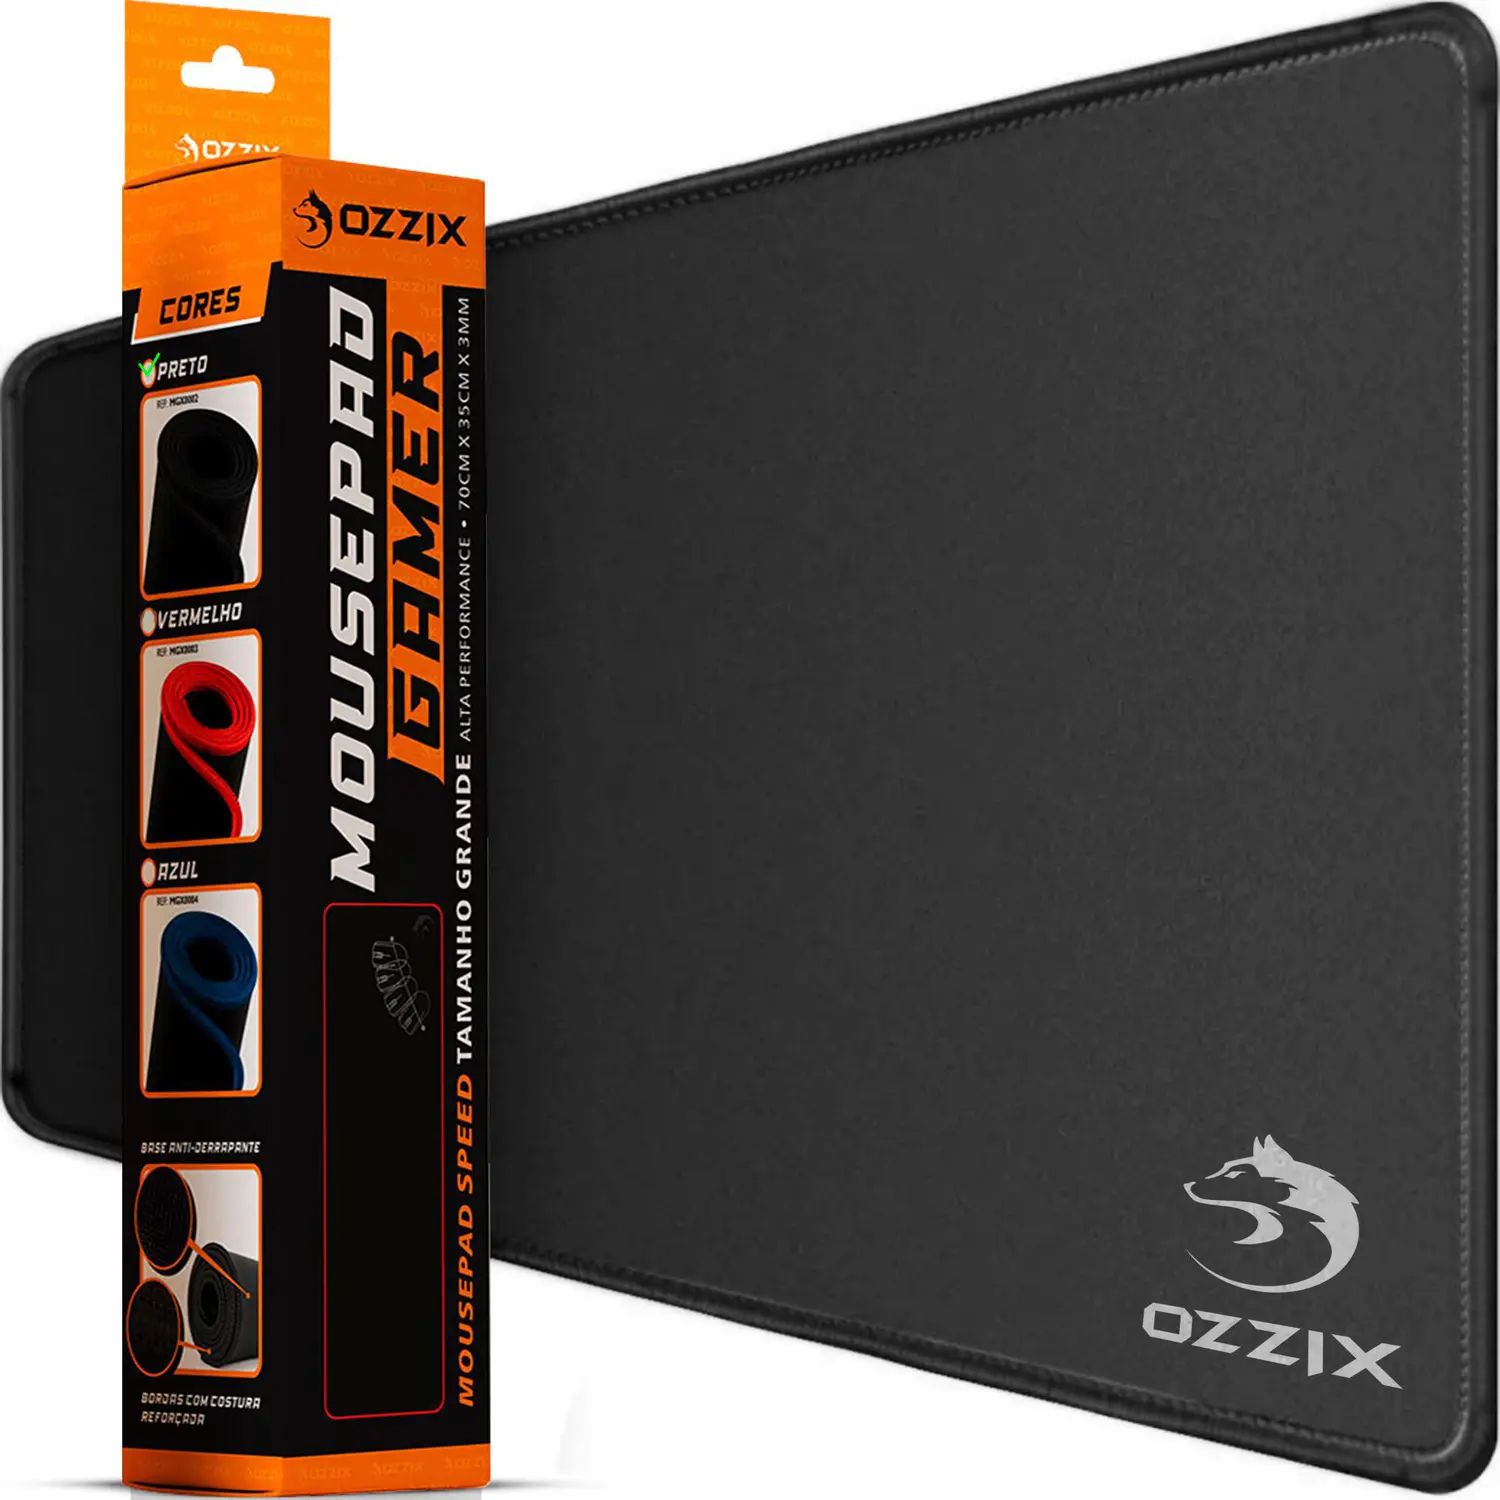 MOUSE PAD GAMER PROFISSIONAL GRANDE PRETO 70X35 SPEED OZZIX - Dismatic  Distribuidora